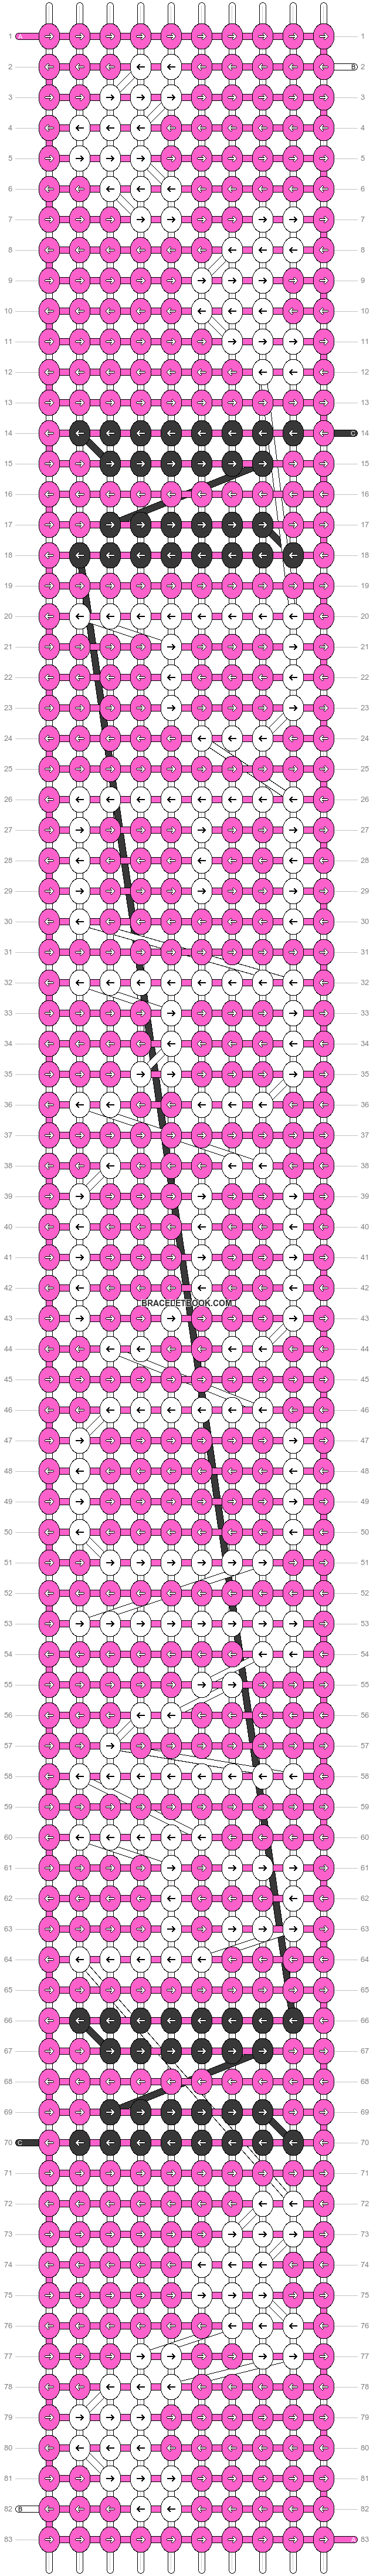 Alpha pattern #31035 pattern